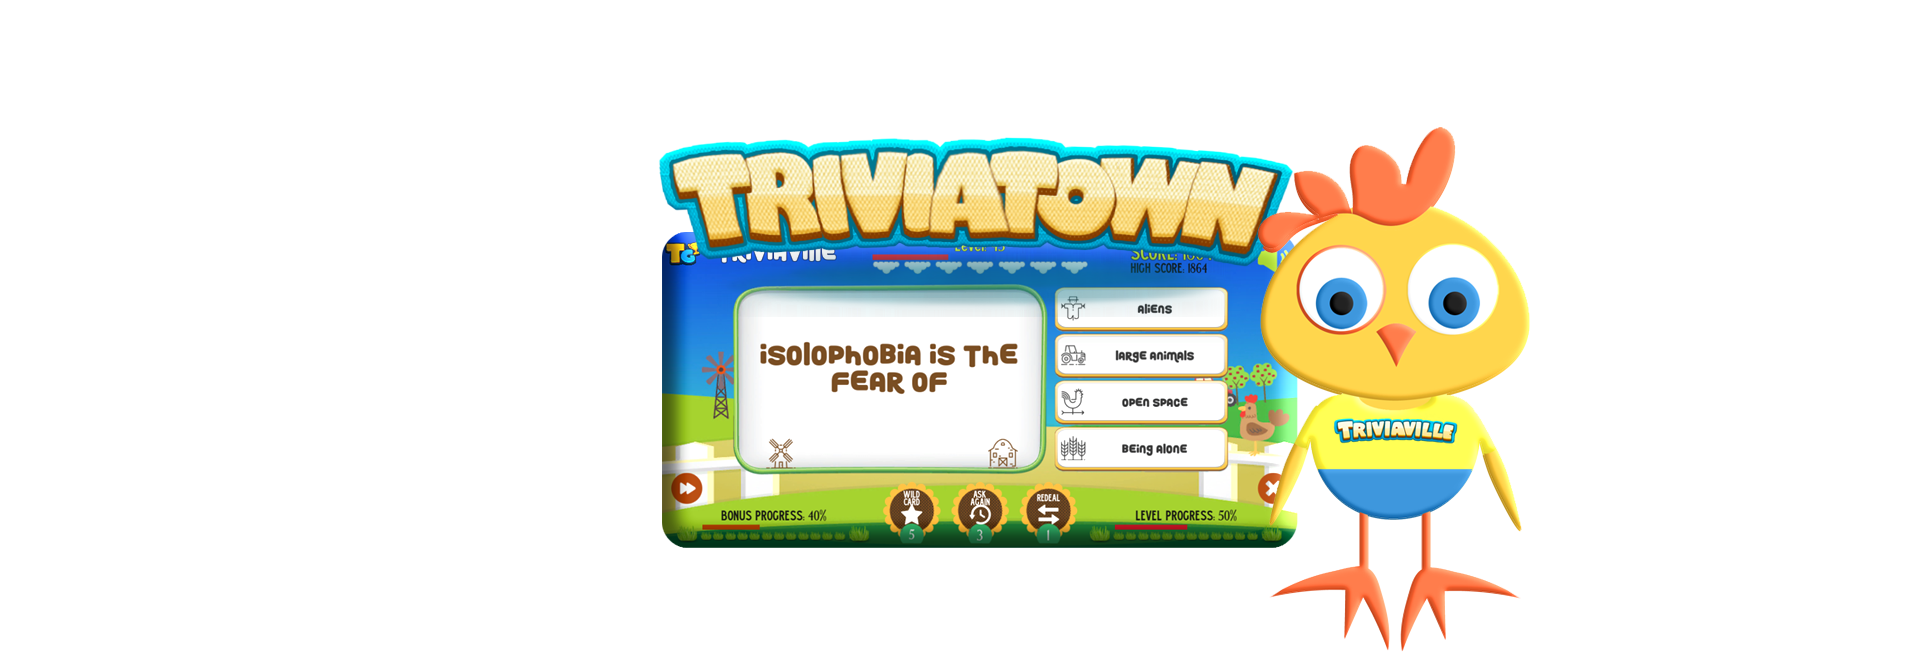 Trivia Town Online Trivia Game Tournaments